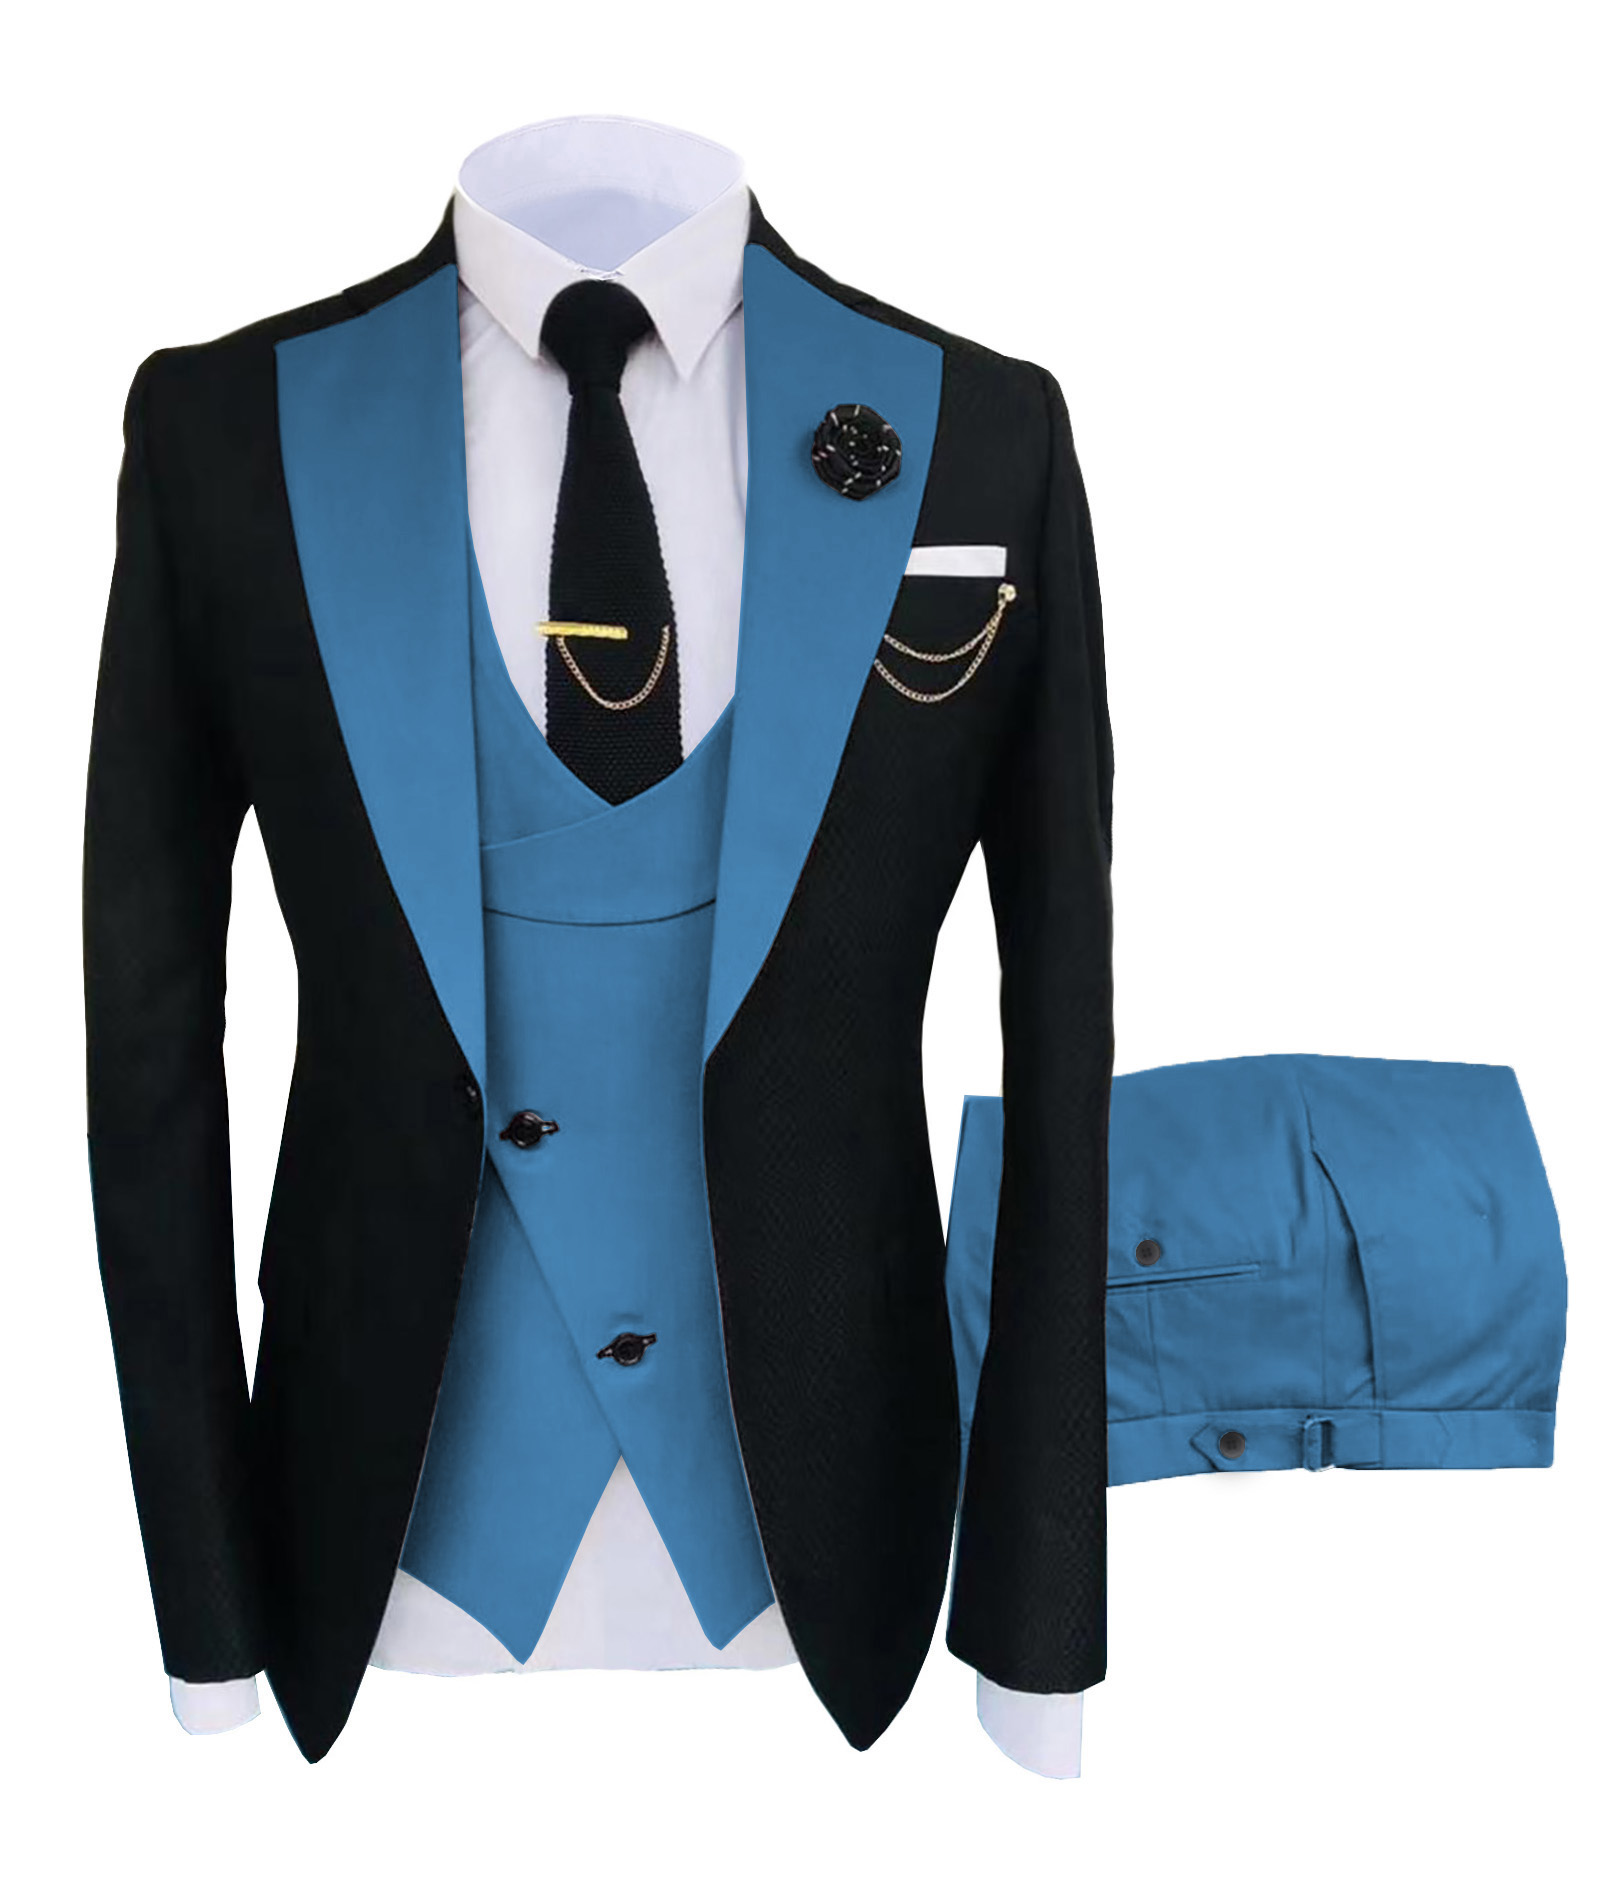 New-Costume-Homme-Popular-Clothing-Luxury-Party-Stage-Men-s-Suit-Groomsmen-Regular-Fit-Tuxedo-3-3.jpg